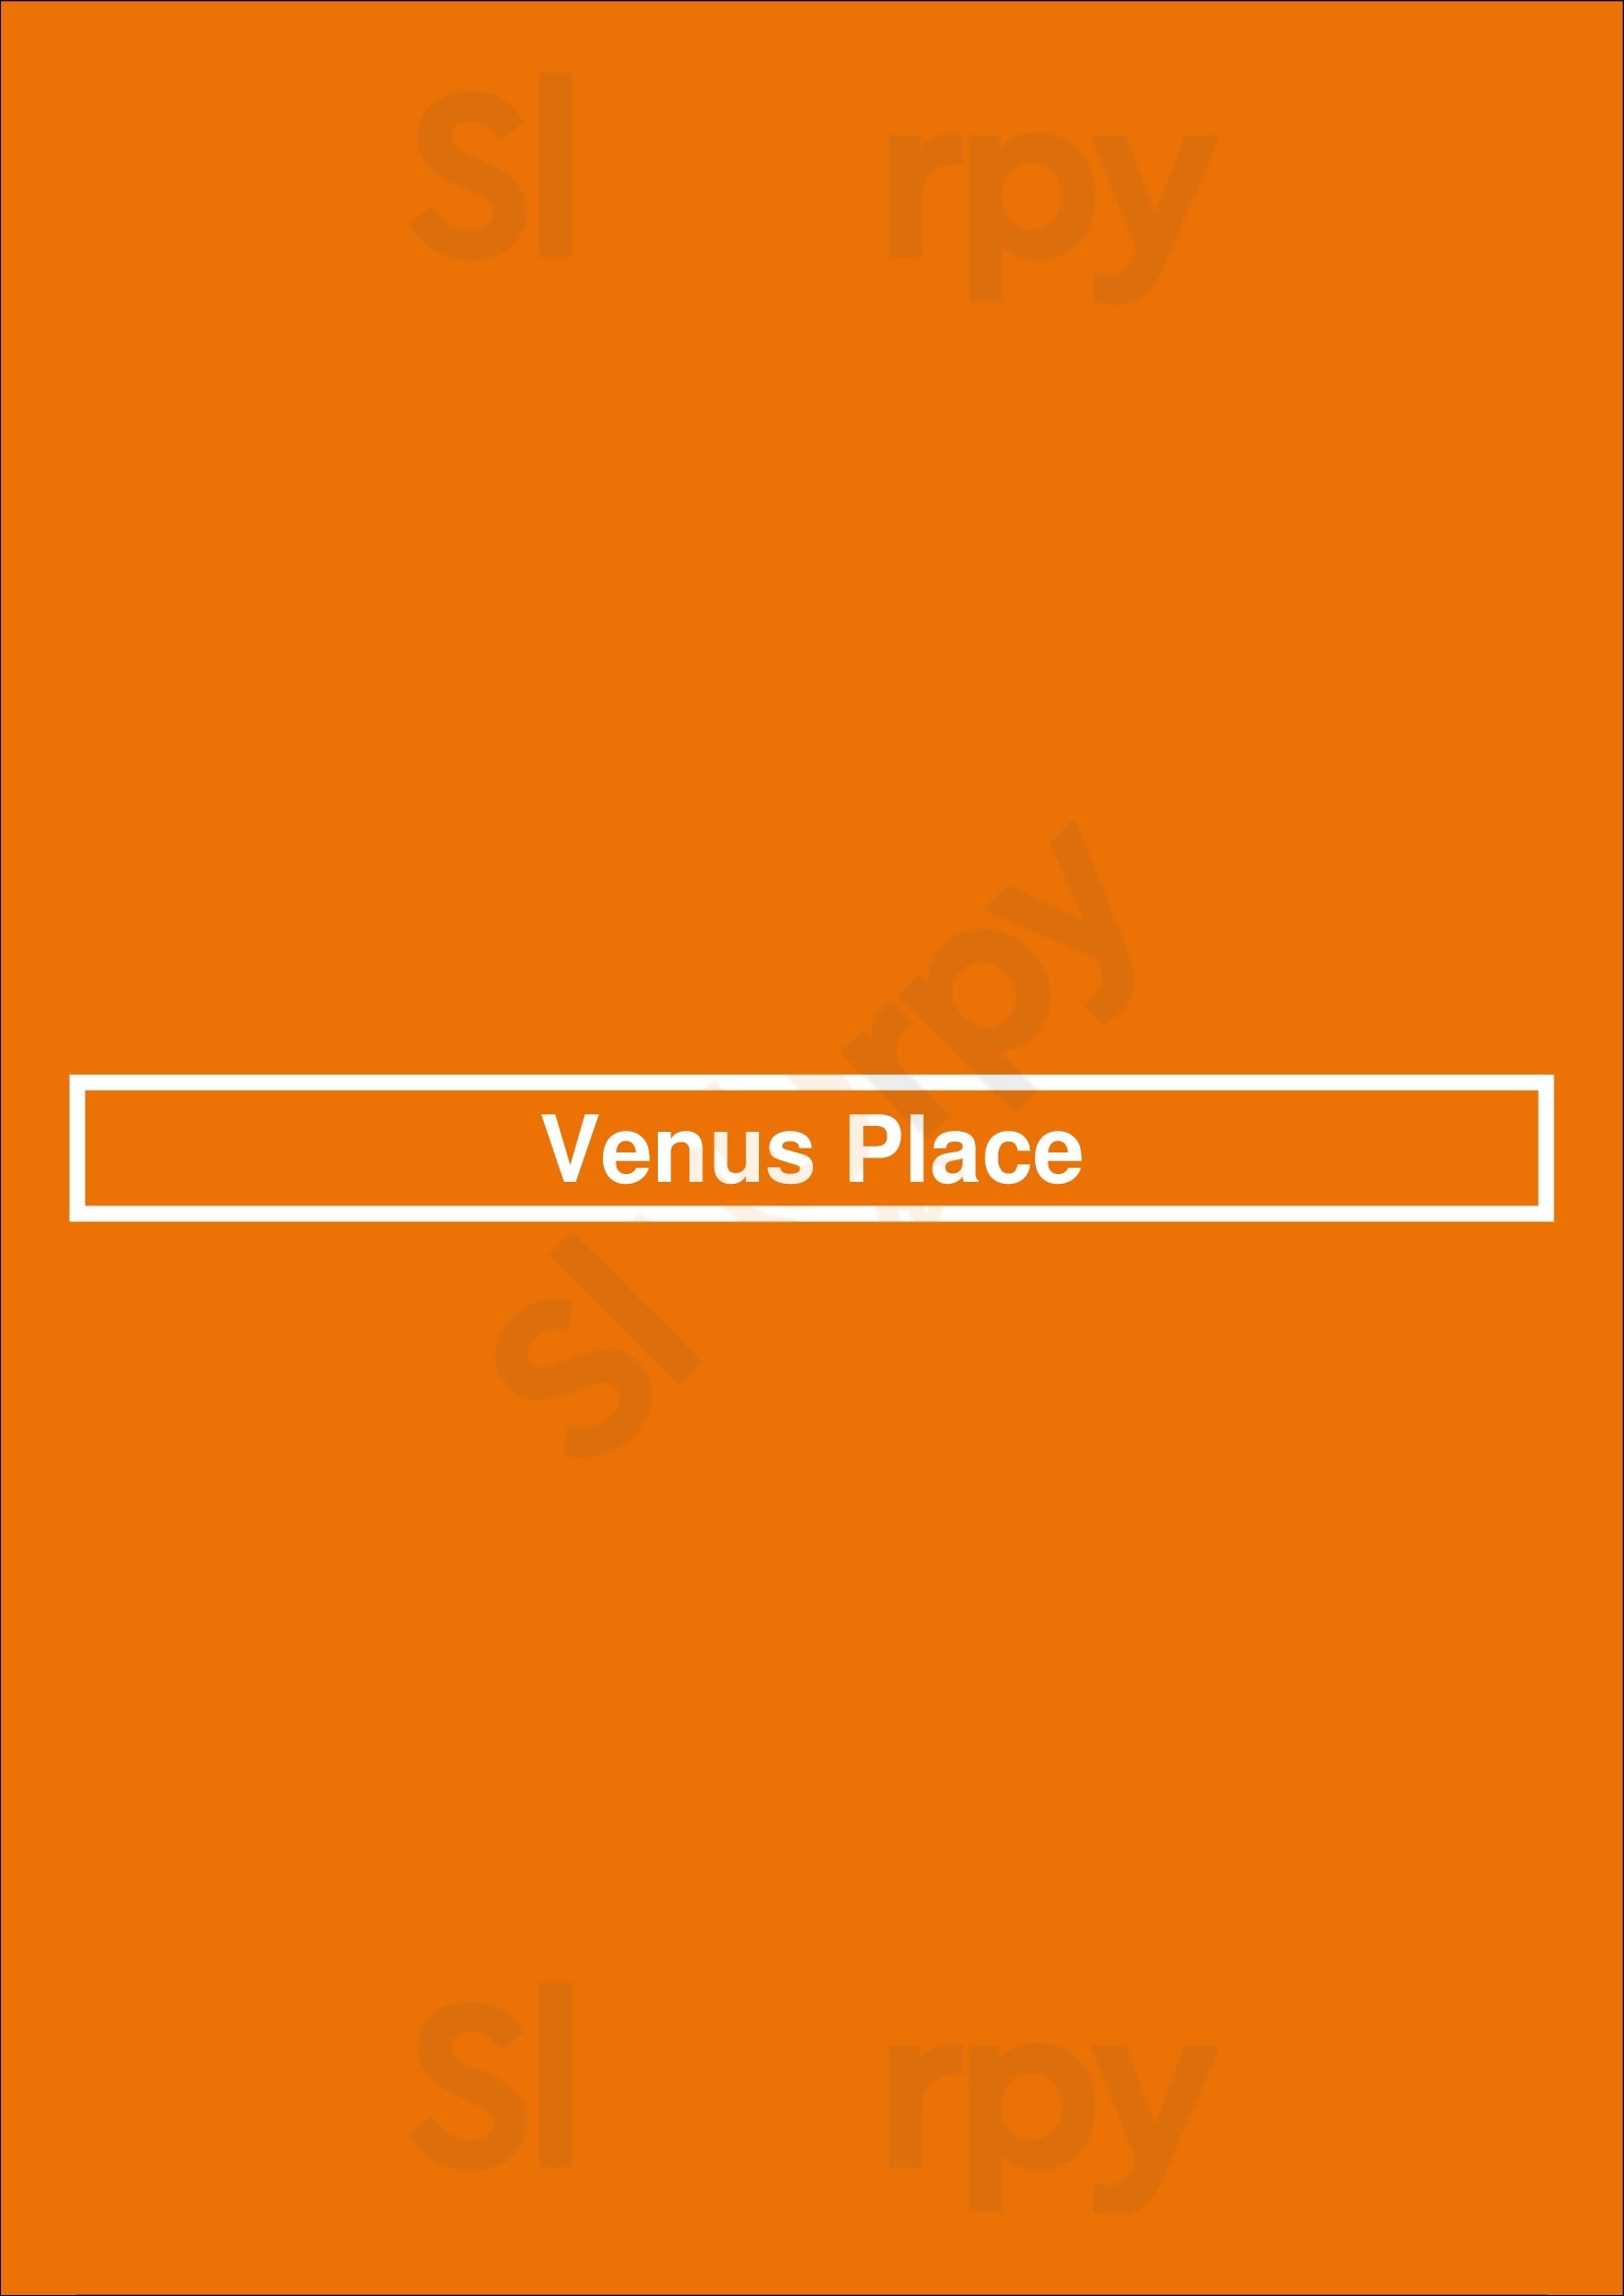 Venus Place New Westminster Menu - 1